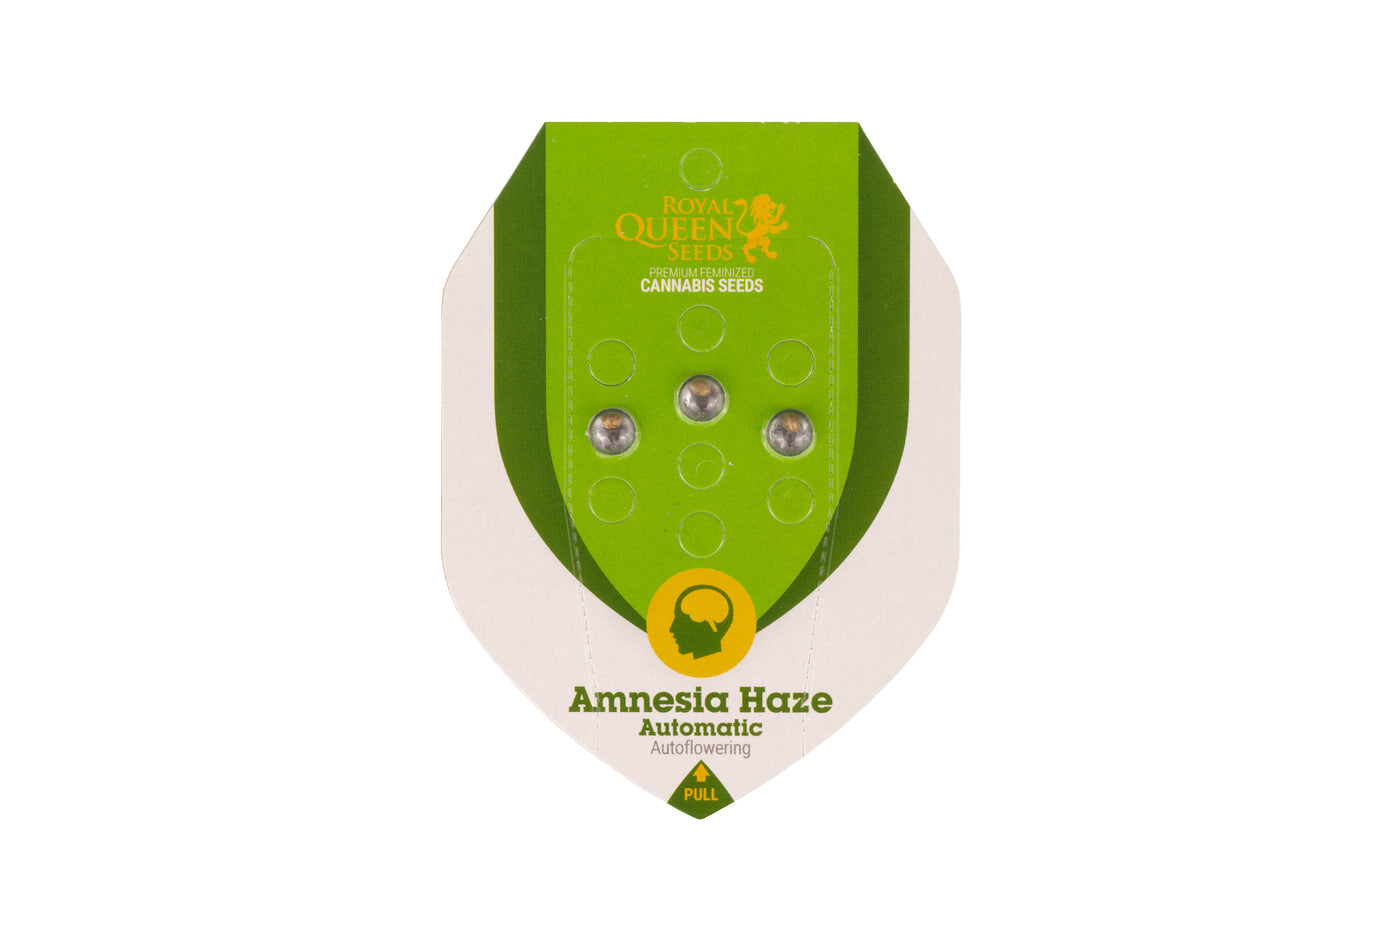 Immagine Packaging Amnesia Haze Automatic - Bongae 